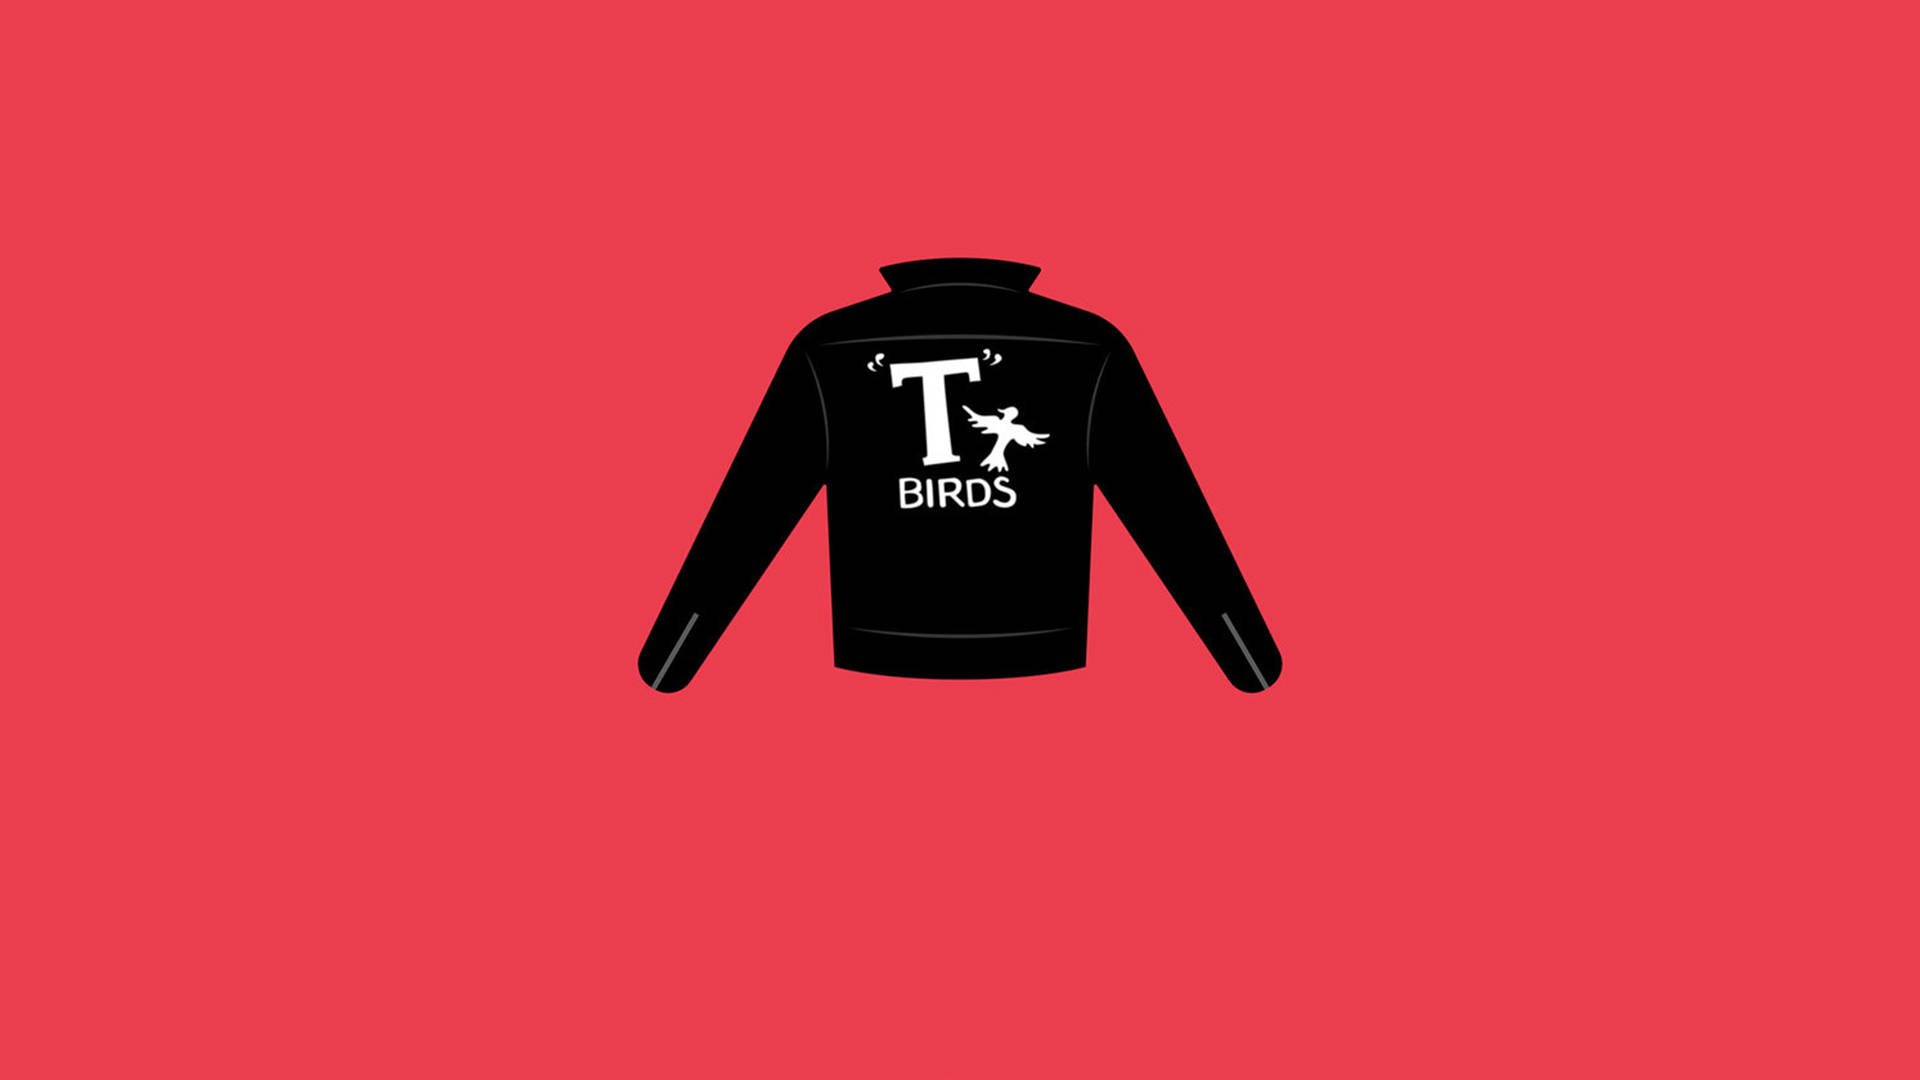 Grease T Birds Jacket Vector Art Background